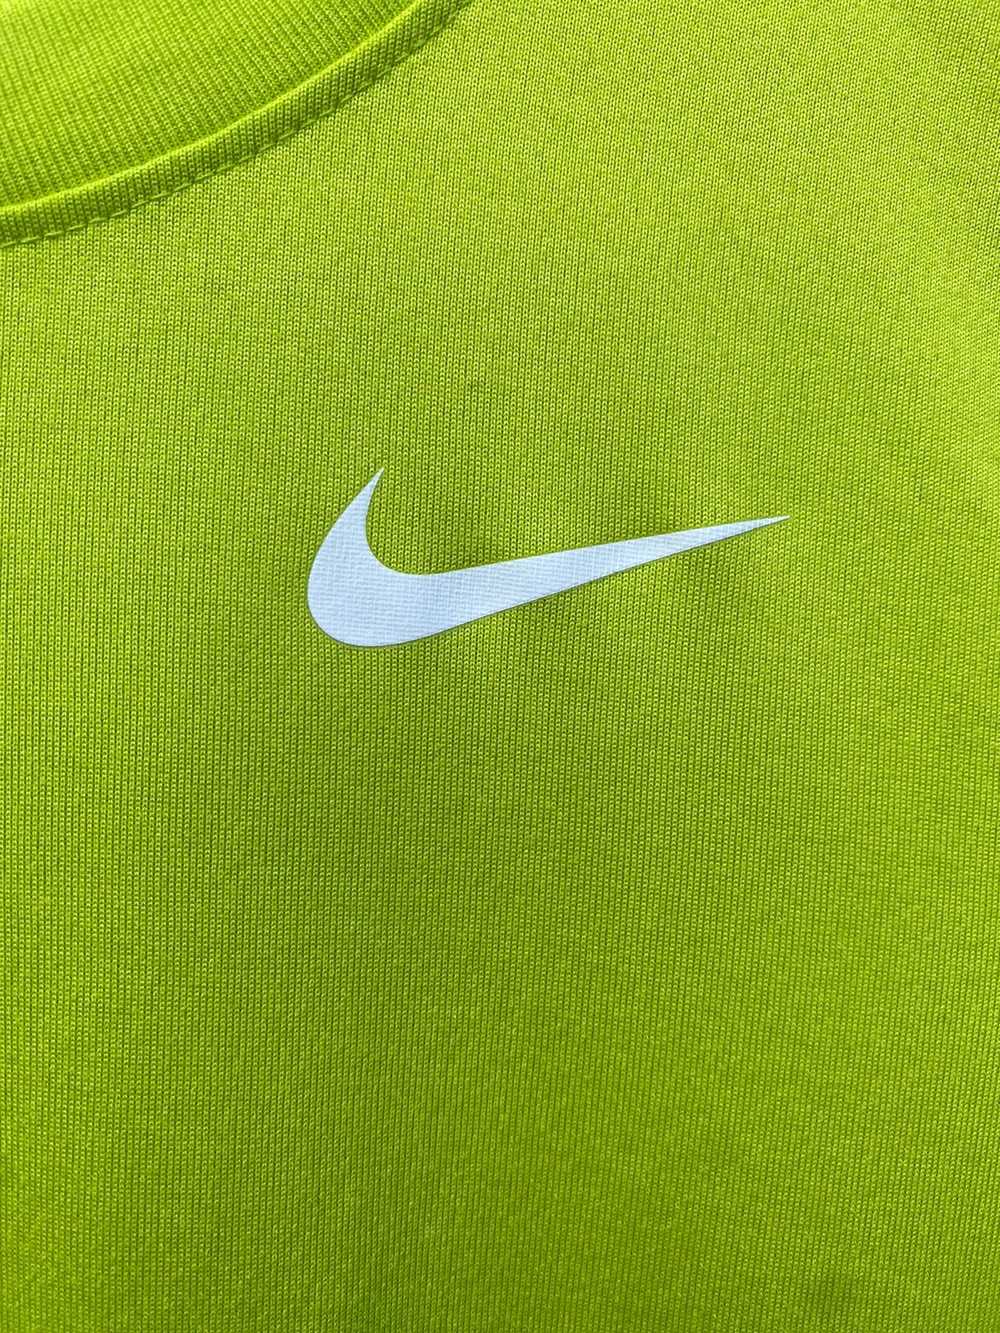 Nike × Vintage Nike Dri-fit Shirt - image 3